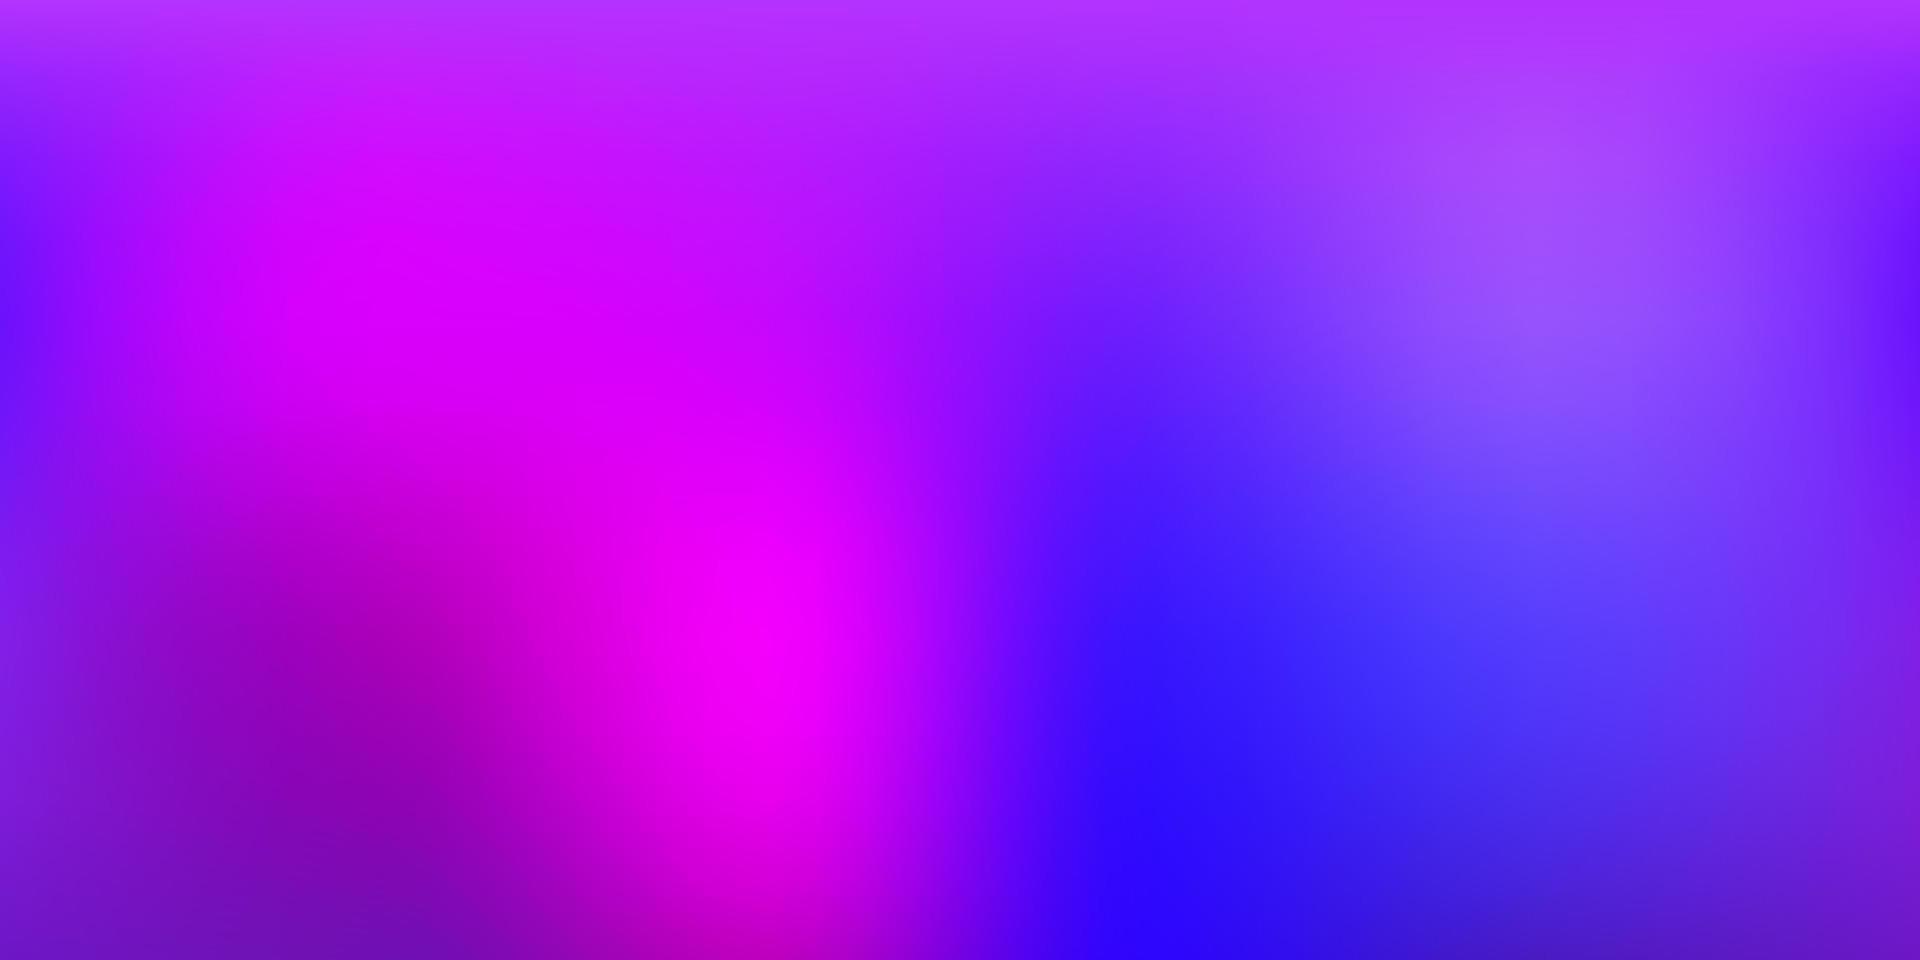 Light Purple, Pink vector blurred backdrop.